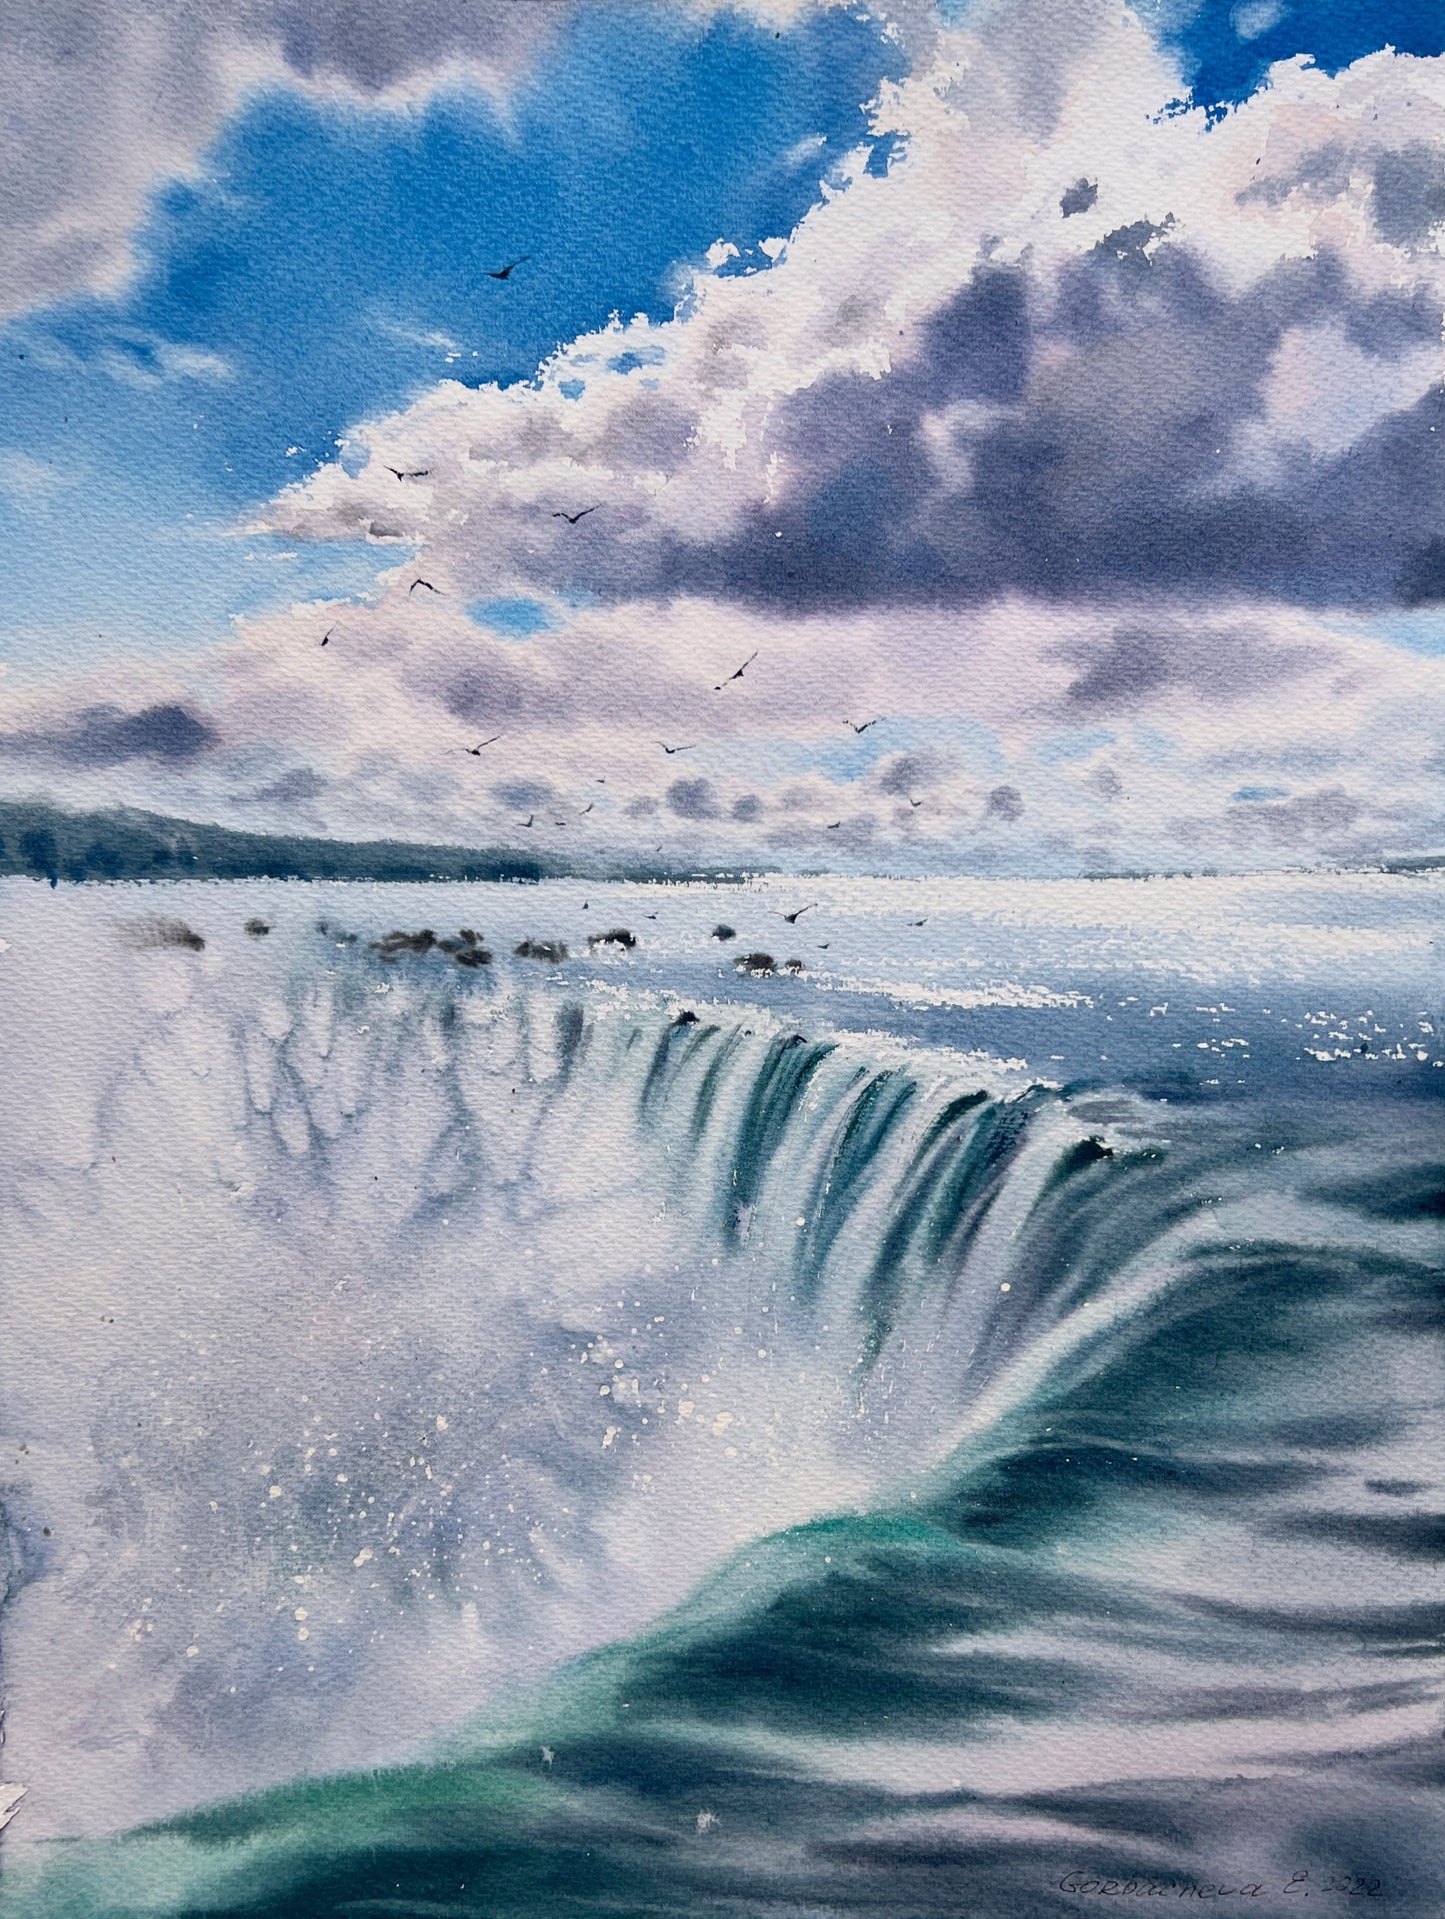 Niagara Falls Painting Original Watercolor, Beautiful Waterfall Landscape, Nature Wall Art Decor, Gift For Traveler